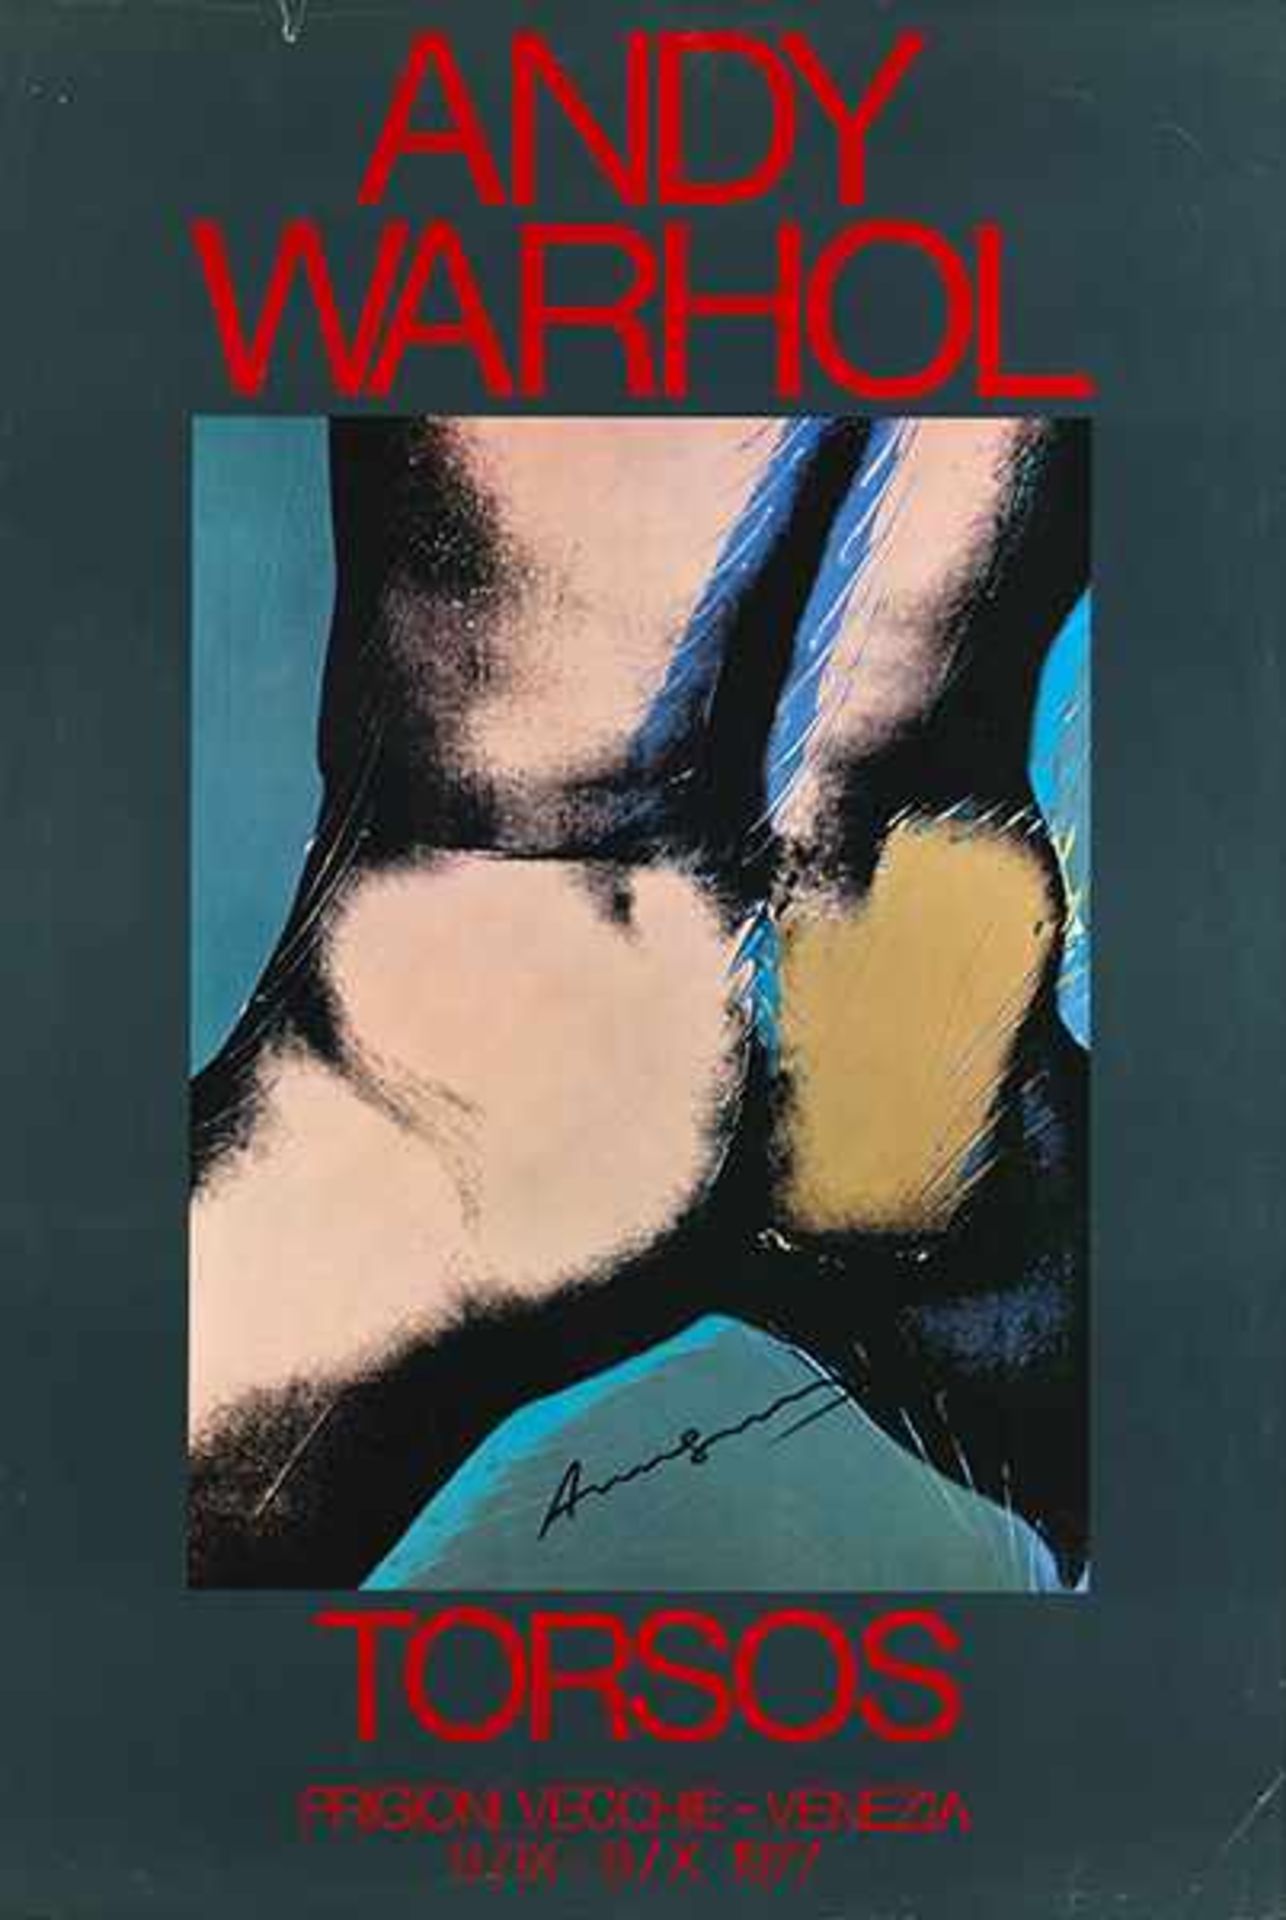 Andy Warhol, 1928 Pittsburgh - 1987 New York ANDY WAHOL TORSOS, PRIGIONI VECCHIE, VENICE 9/ IX -